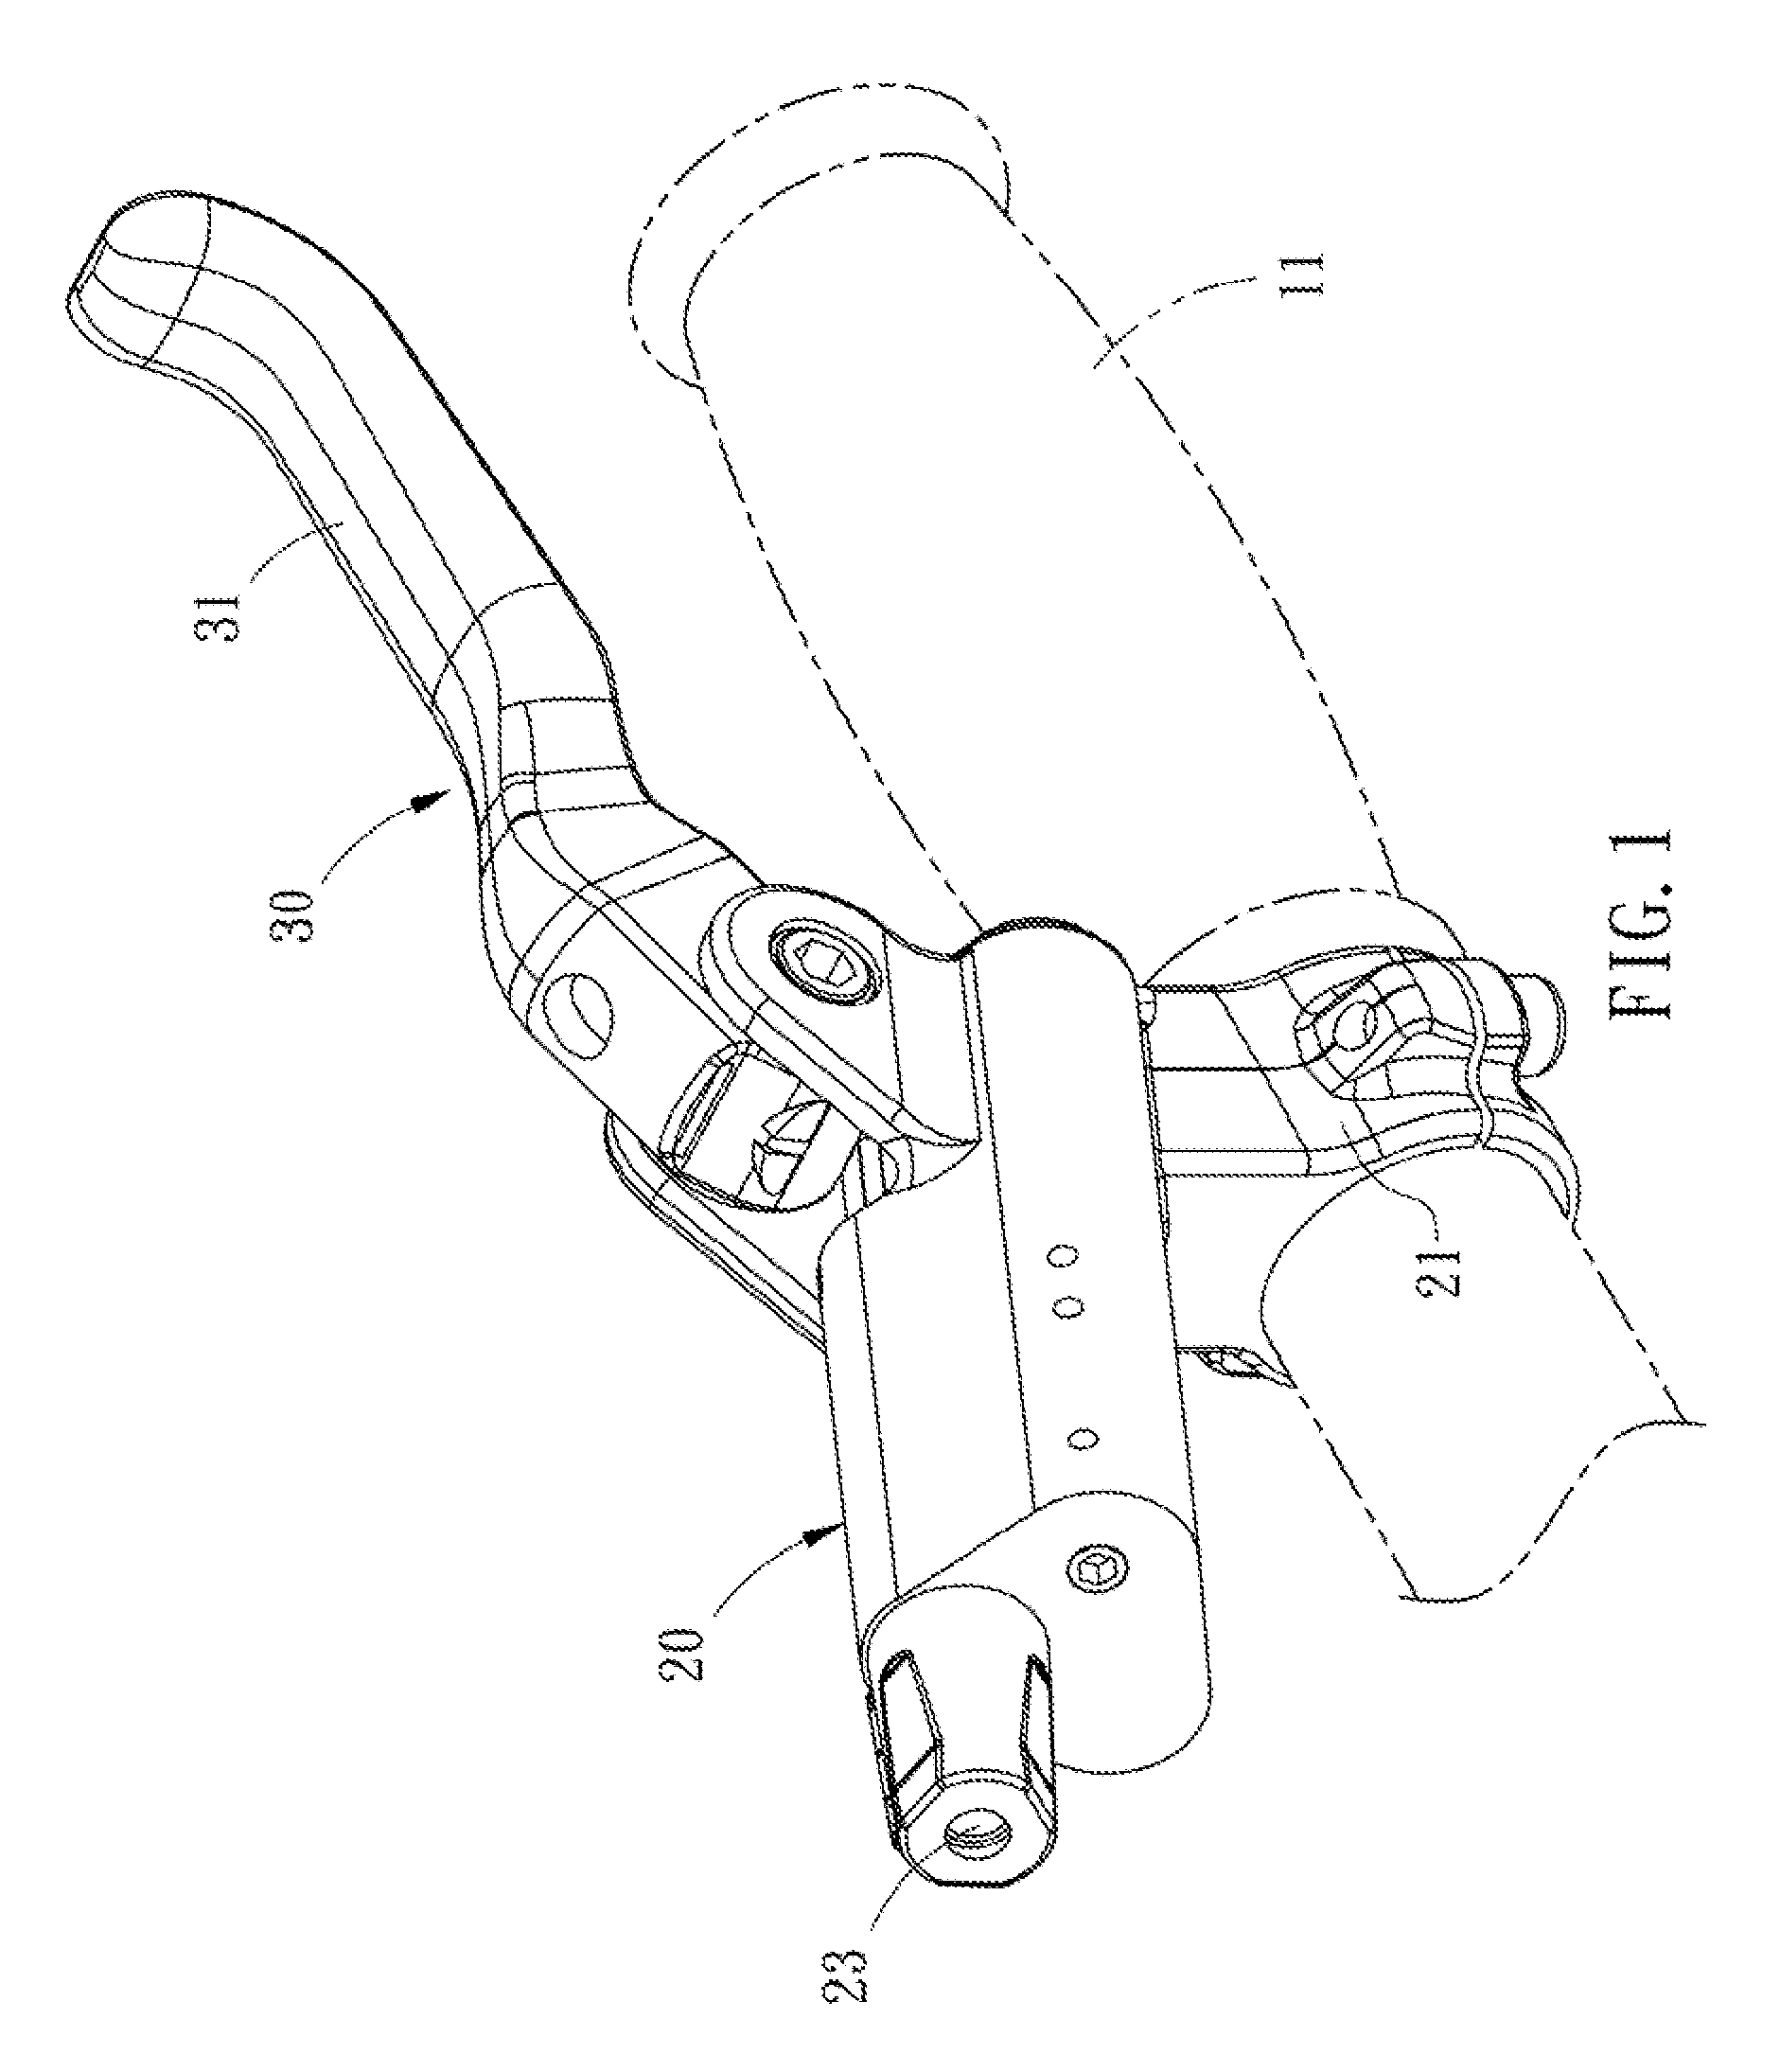 Hydraulic brake handle assembly